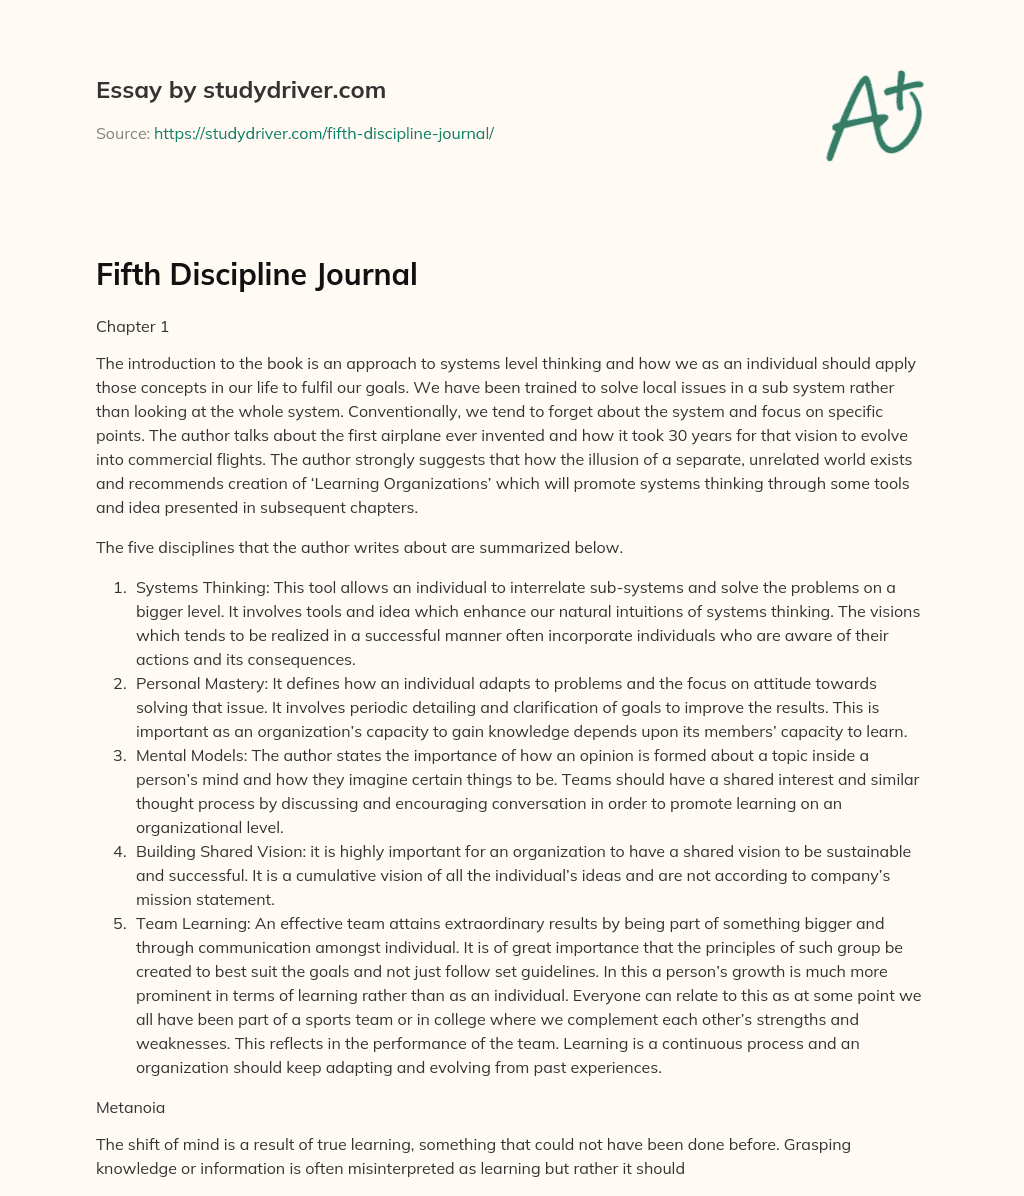 Fifth Discipline Journal essay